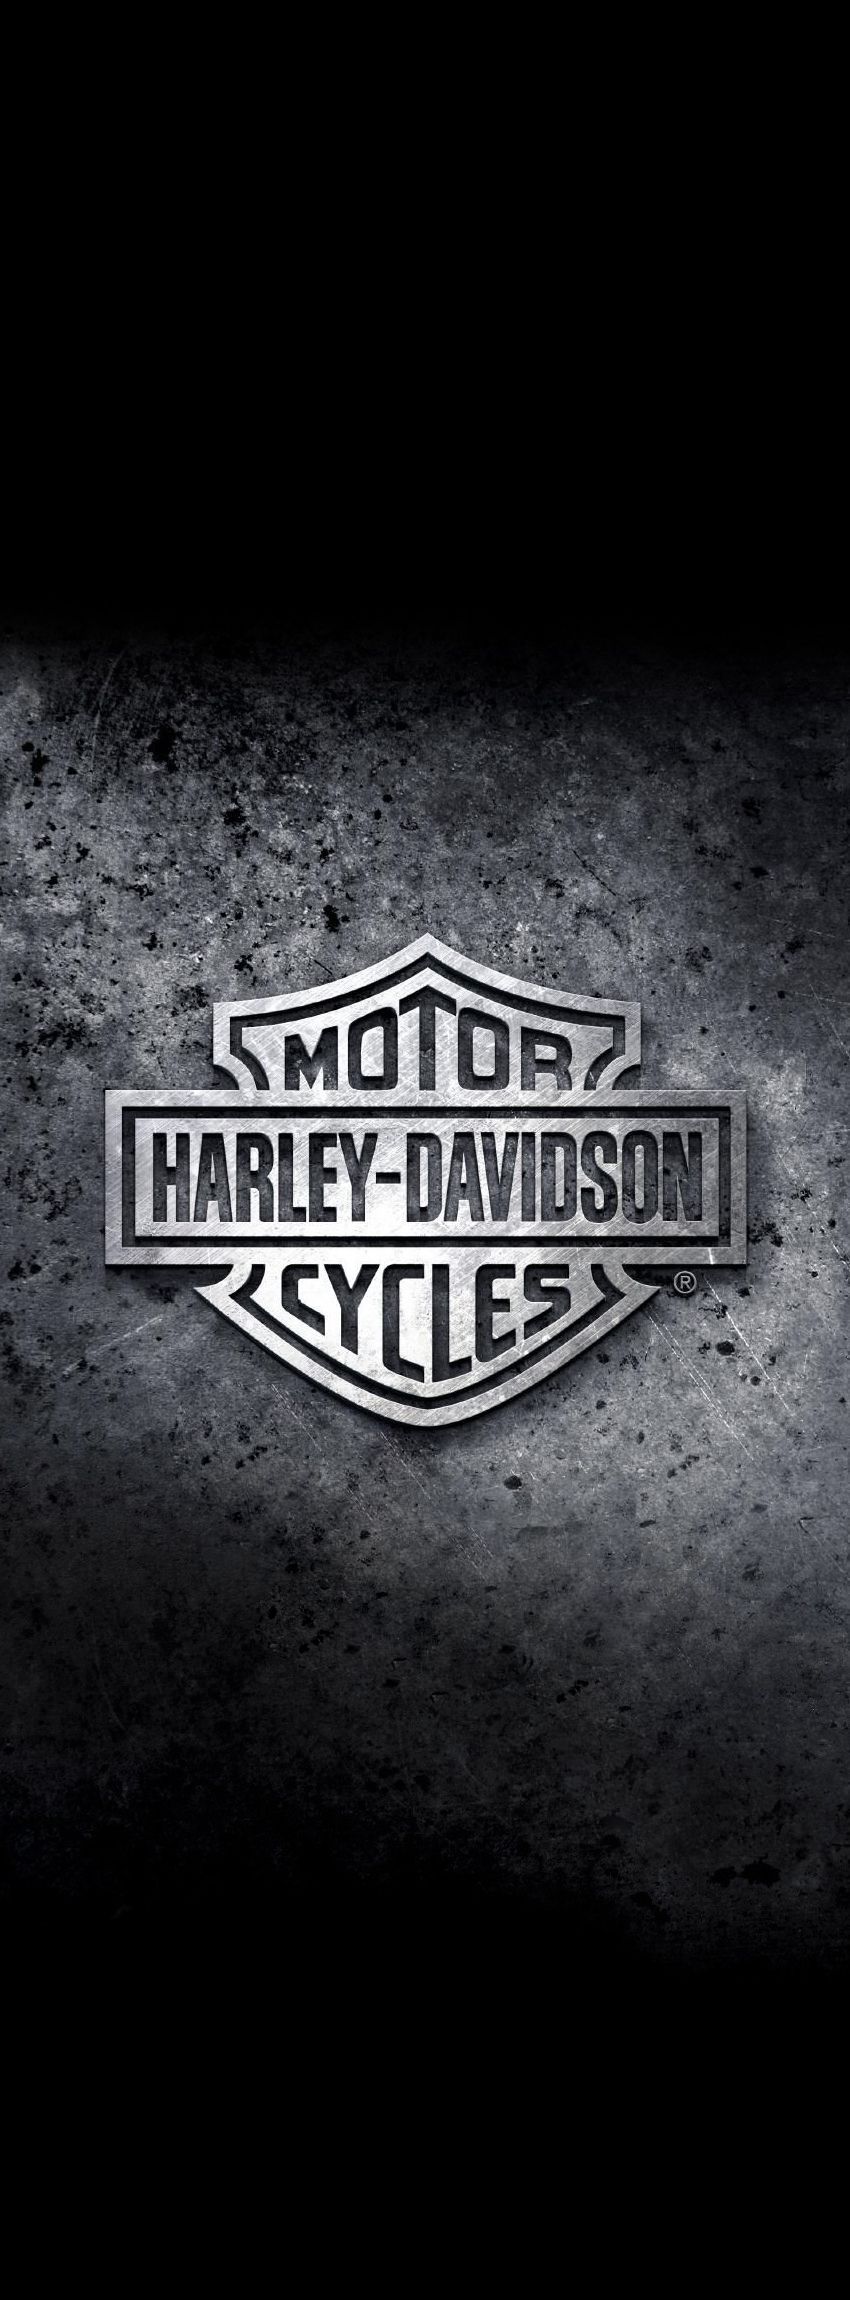 Harley Phone Wallpaper. Harley davidson wallpaper, Harley davidson artwork, Harley davidson decals